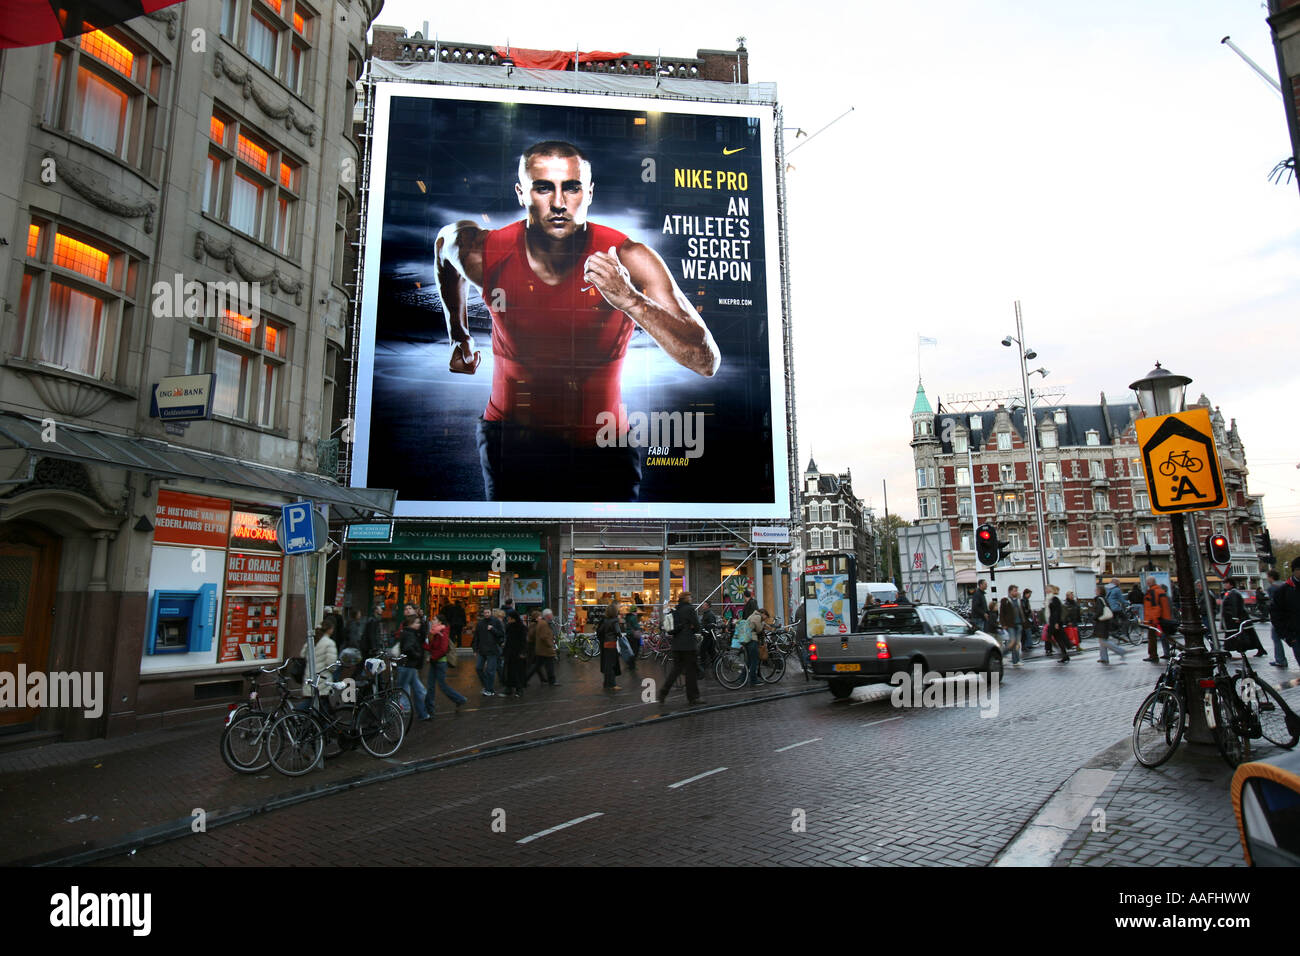 Nike advertisement with the football player Fabio Cannavaro Stock Photo -  Alamy